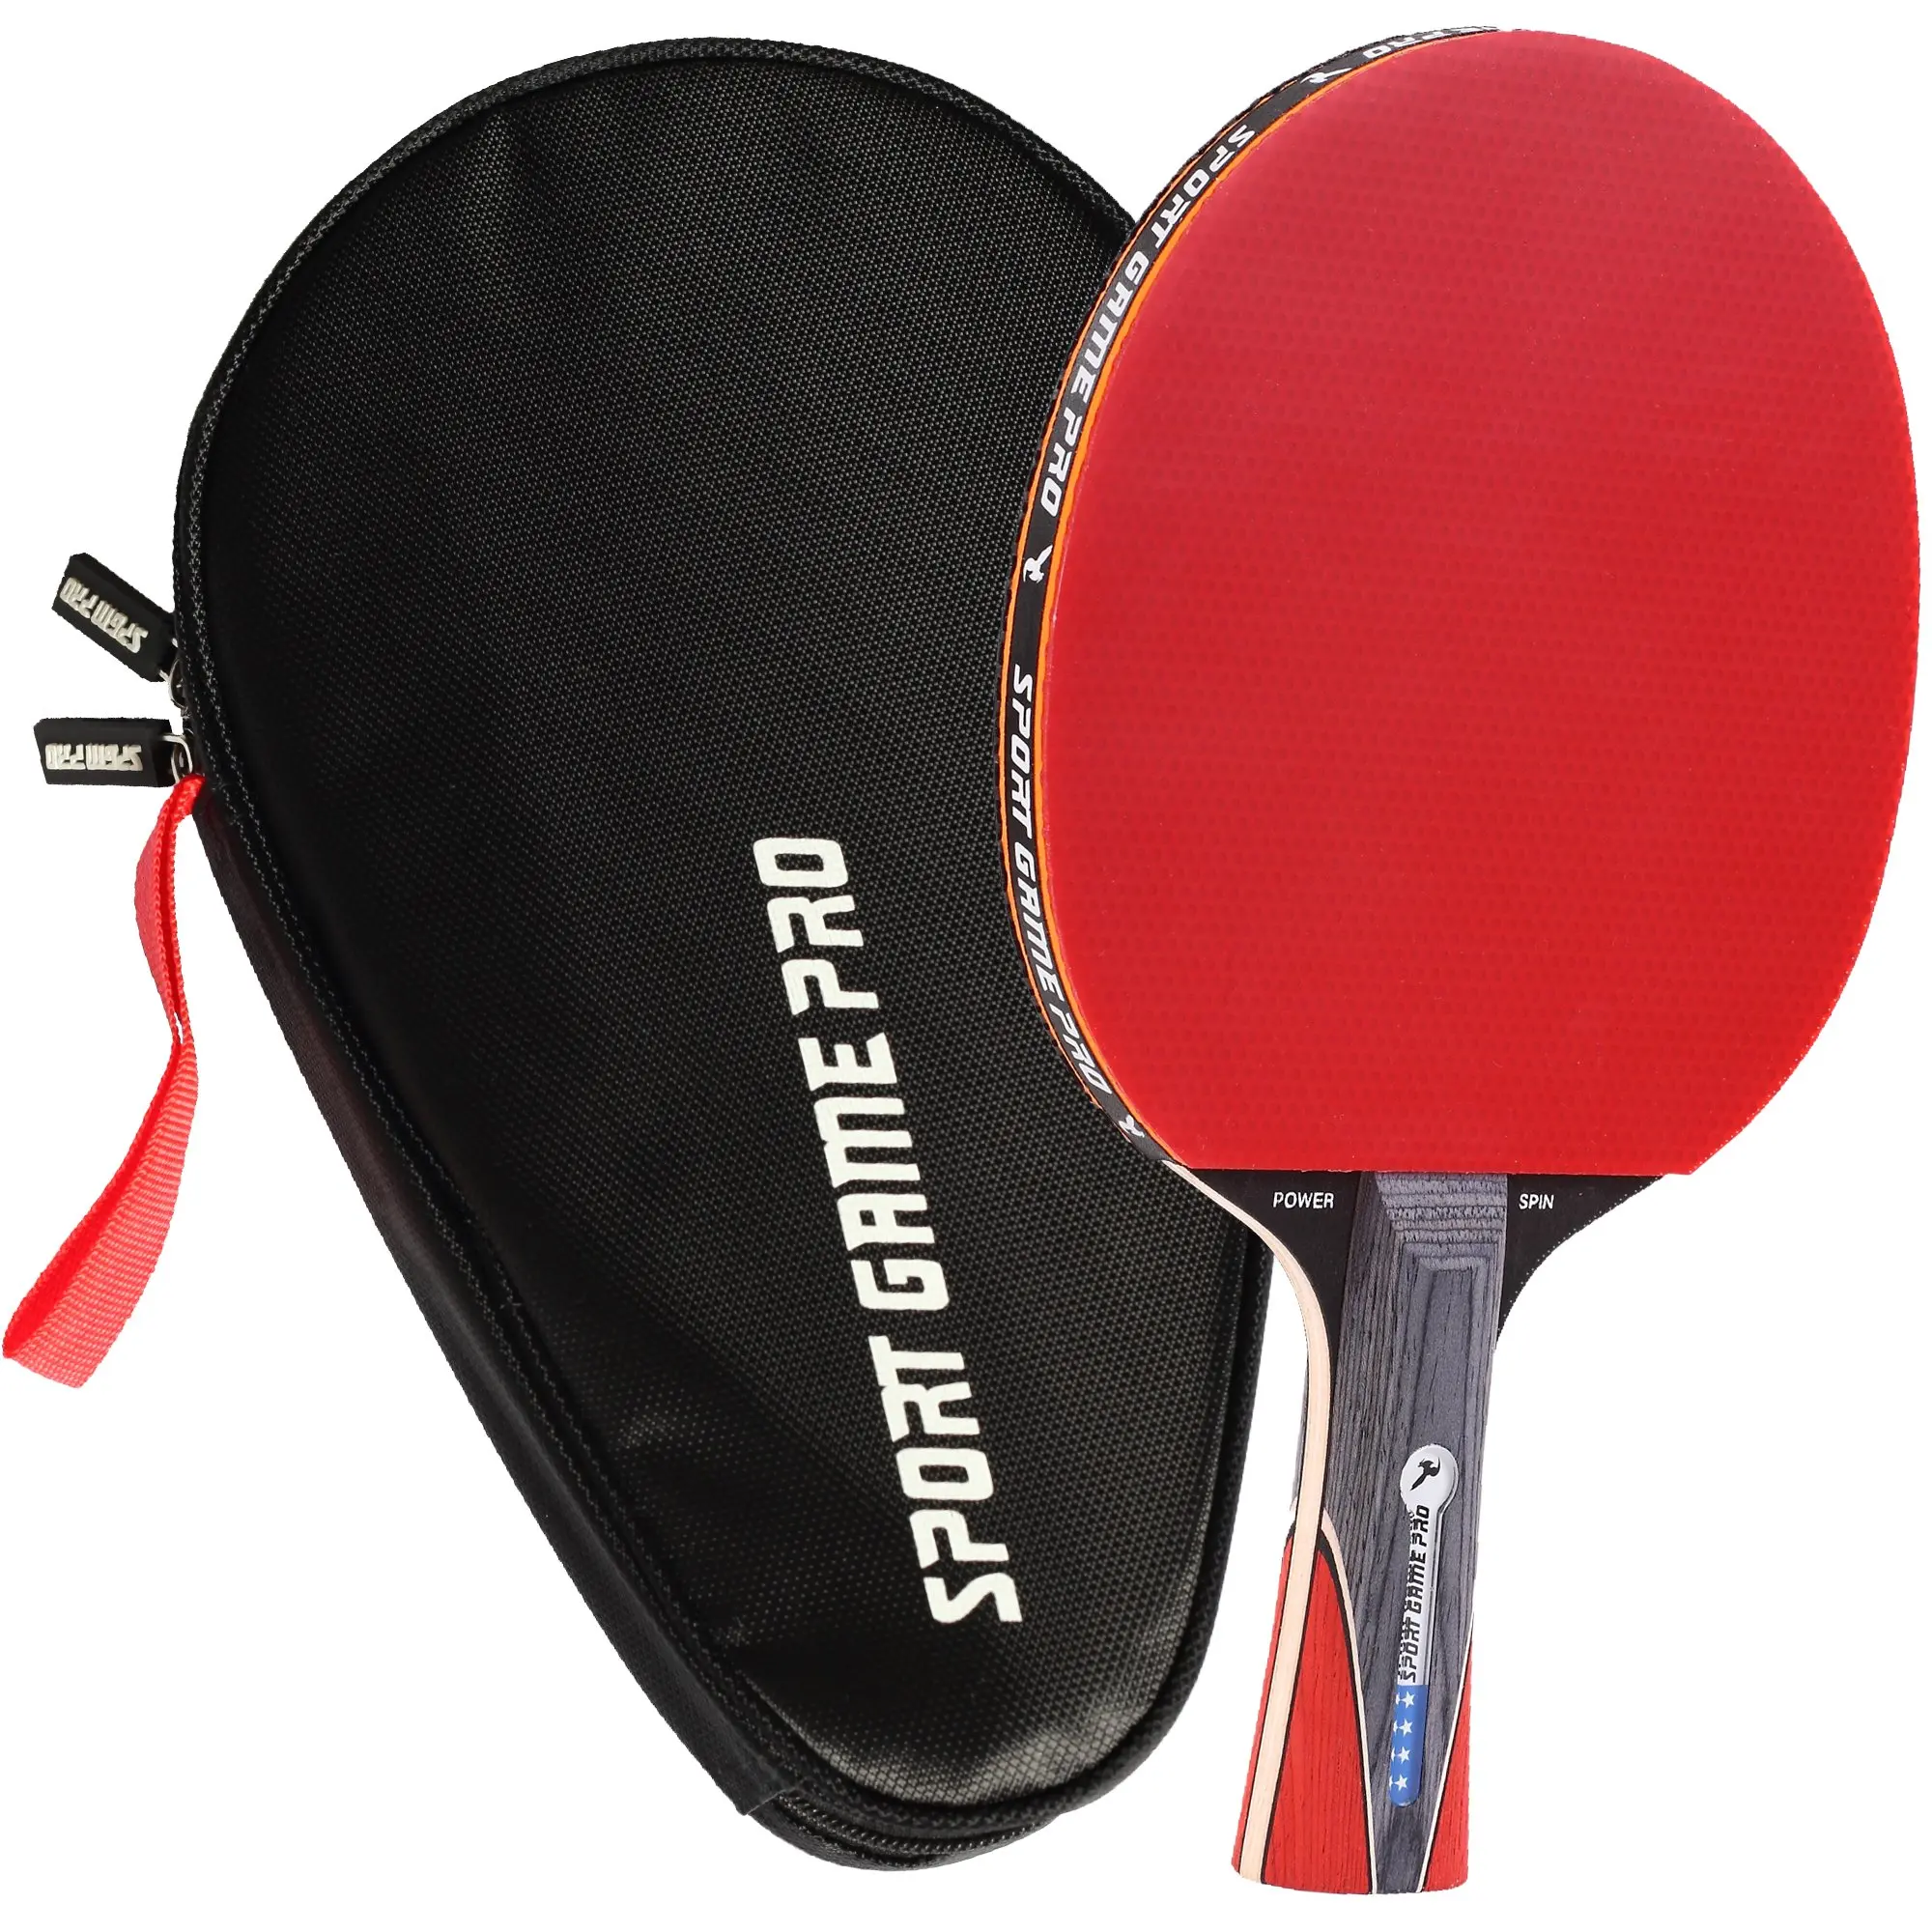 Какую ракетку купить для настольного. Ракетка для Paddle Tennis. Table Tennis Racket набор. ARTENGO ракетки для настольного тенниса. Ракетка Dobest Champion line 6.